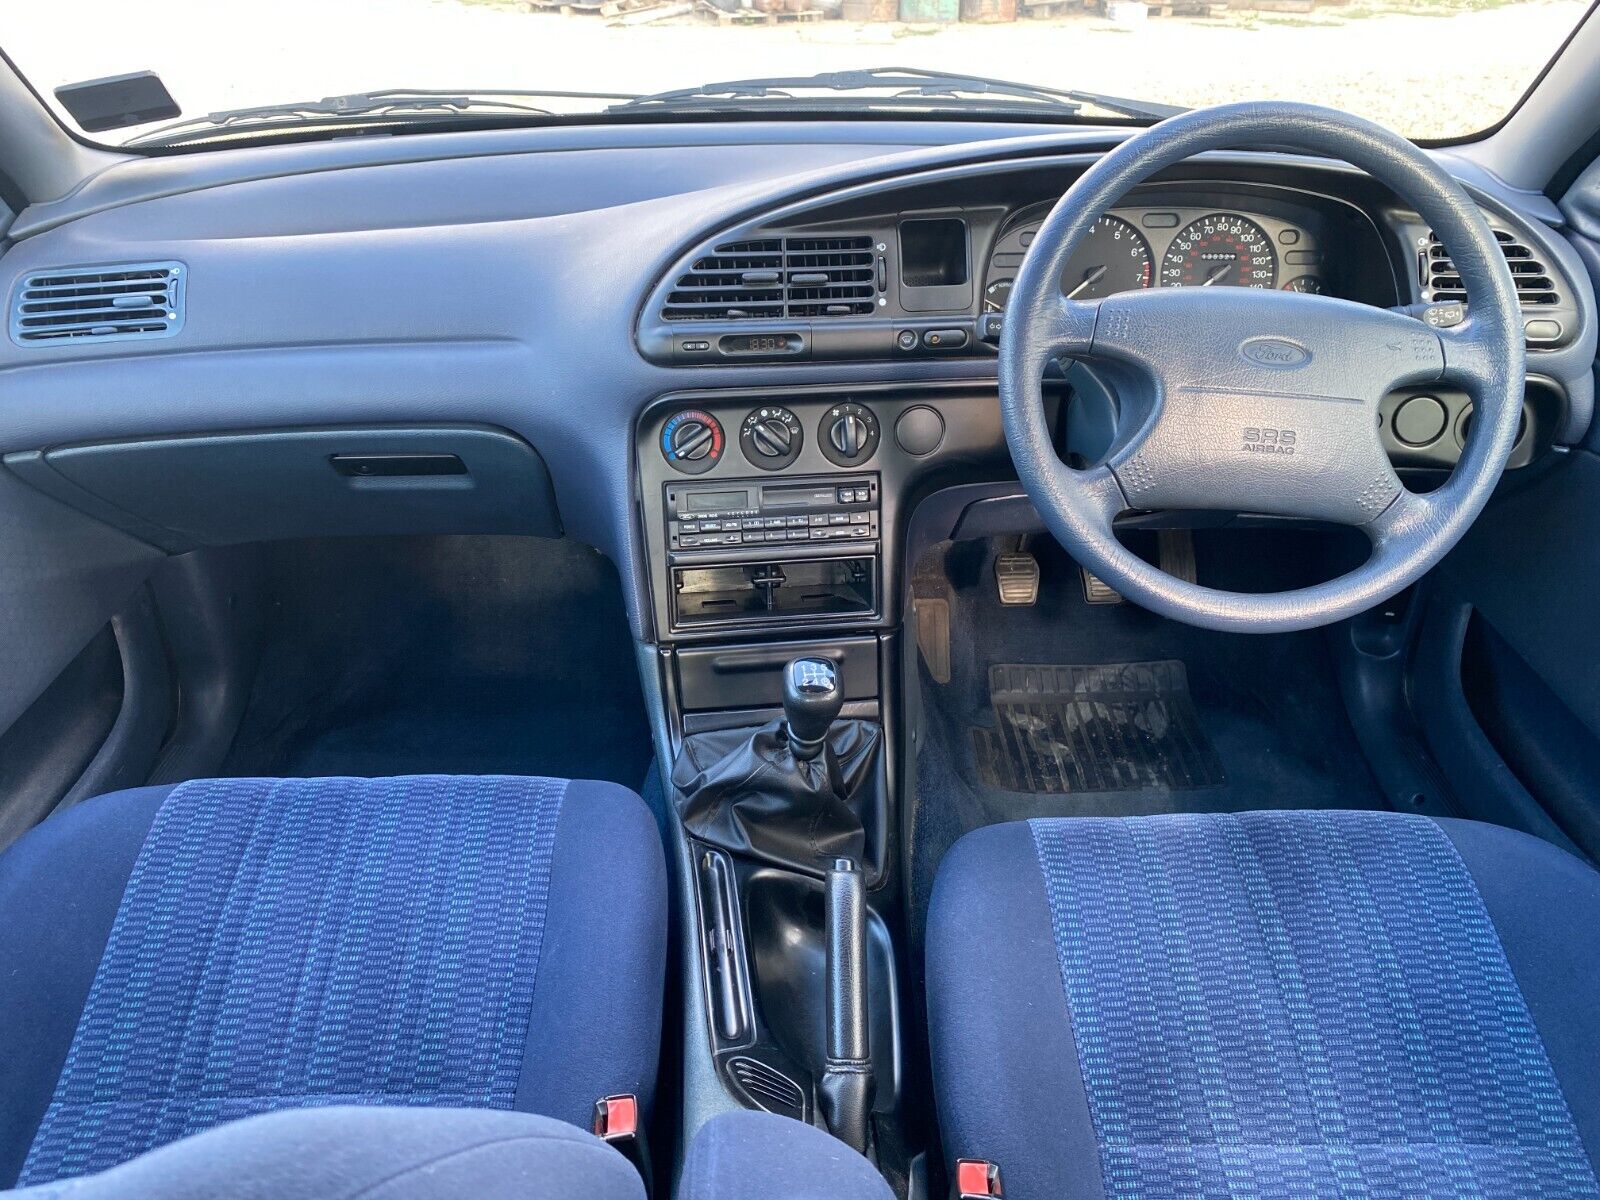 Ford Mondeo LX interior